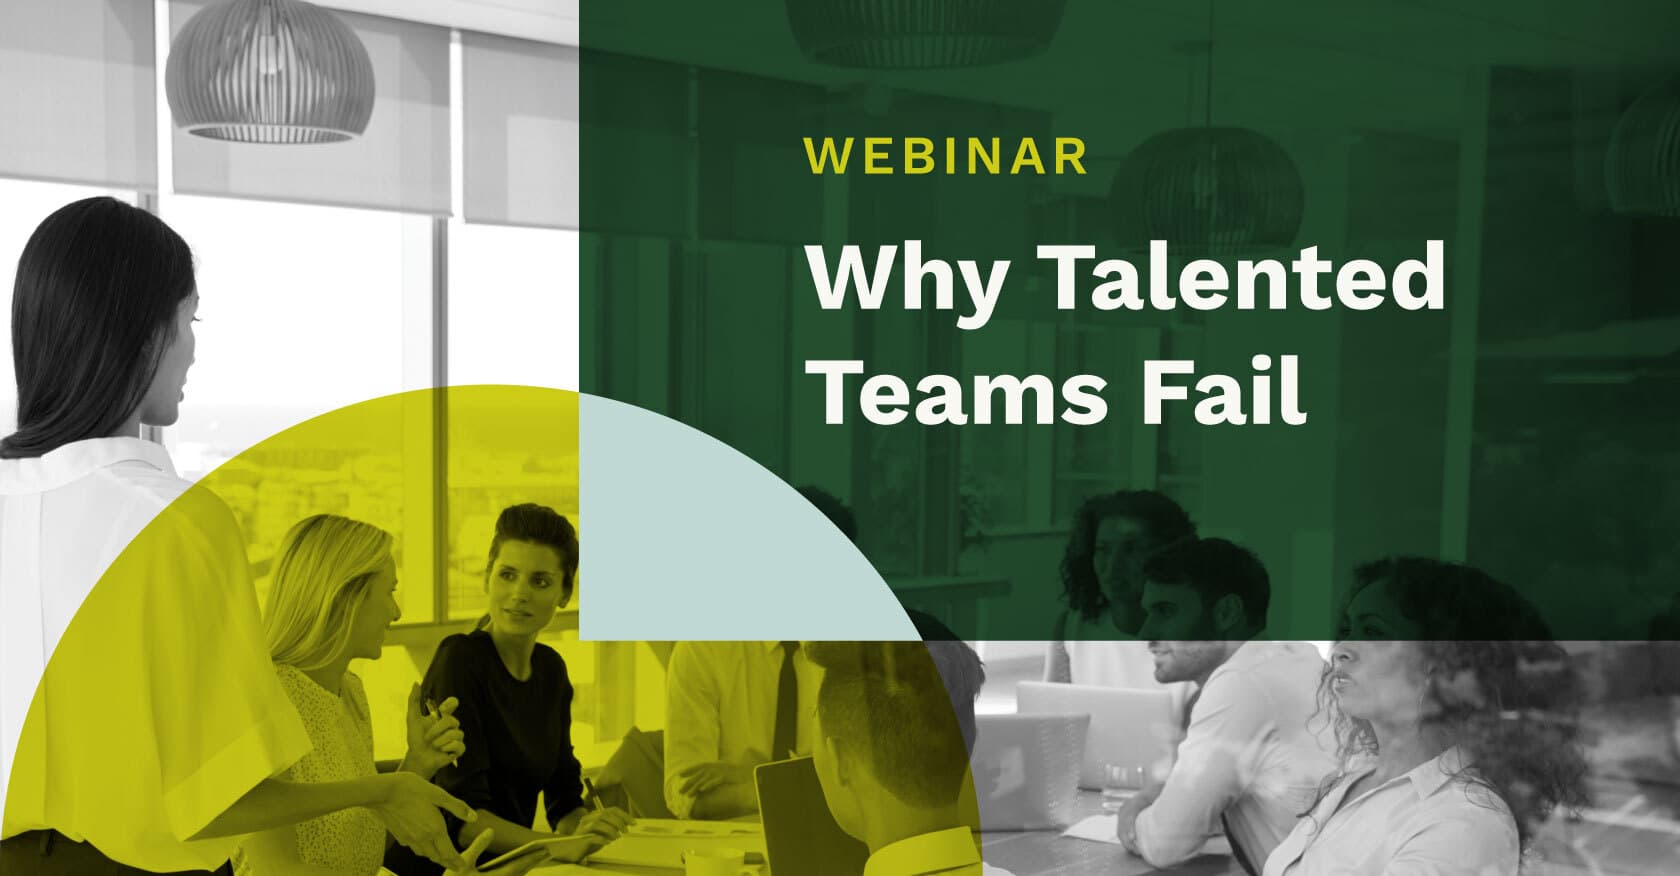 Webinar Why Talented Teams Fail